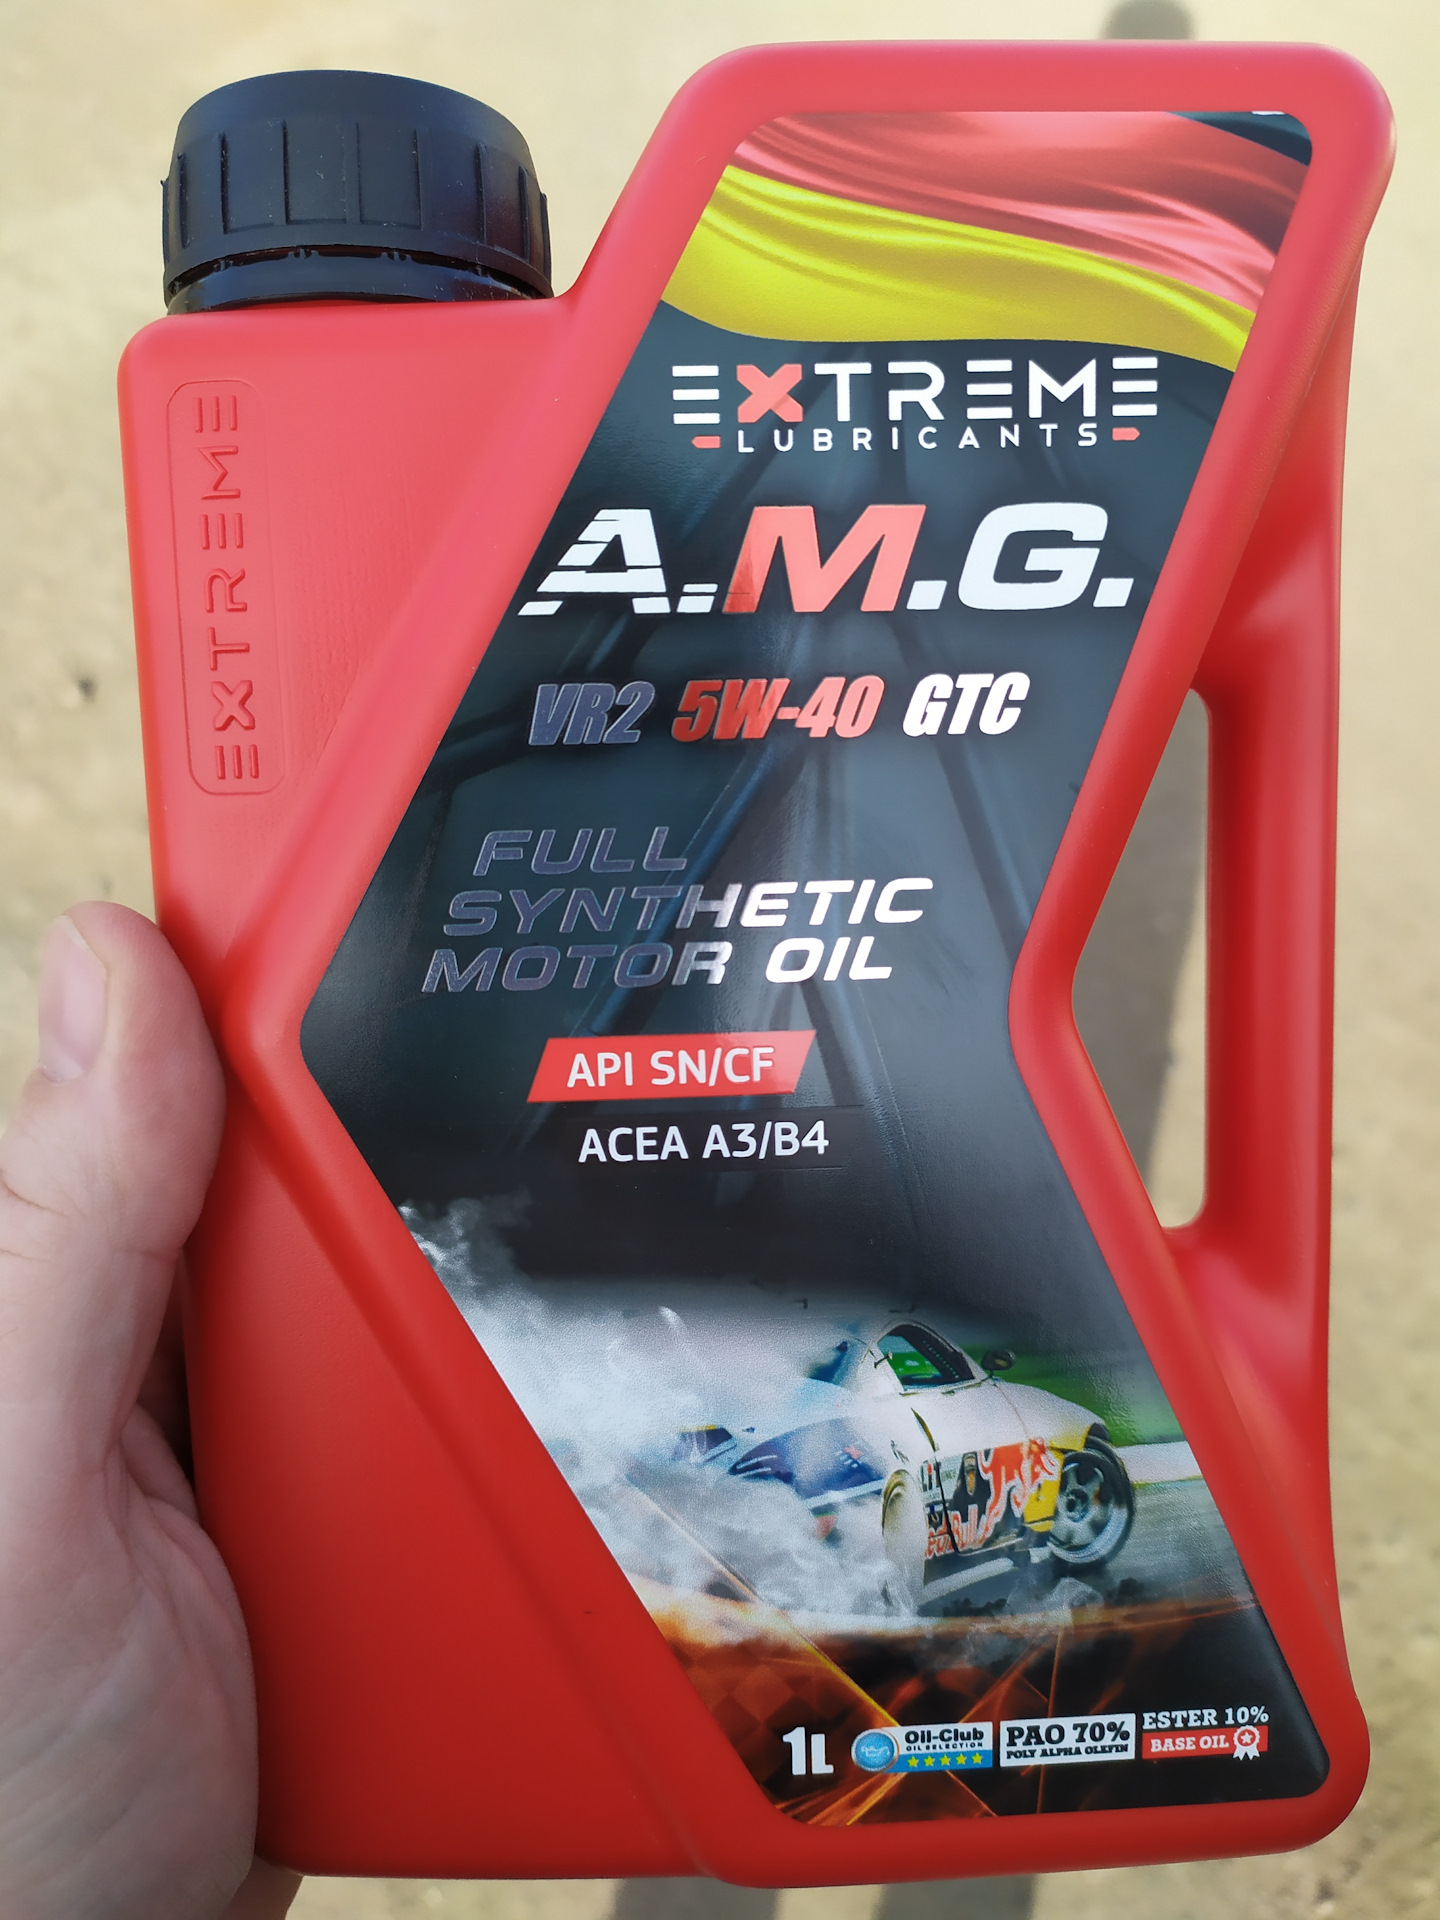 Купить масло а5 в5. Extreme AMG 5w40. Масло AMG extreme 5w40. Extreme vr2 5w-40. Extreme AMG vr2 5w-40 GTC.